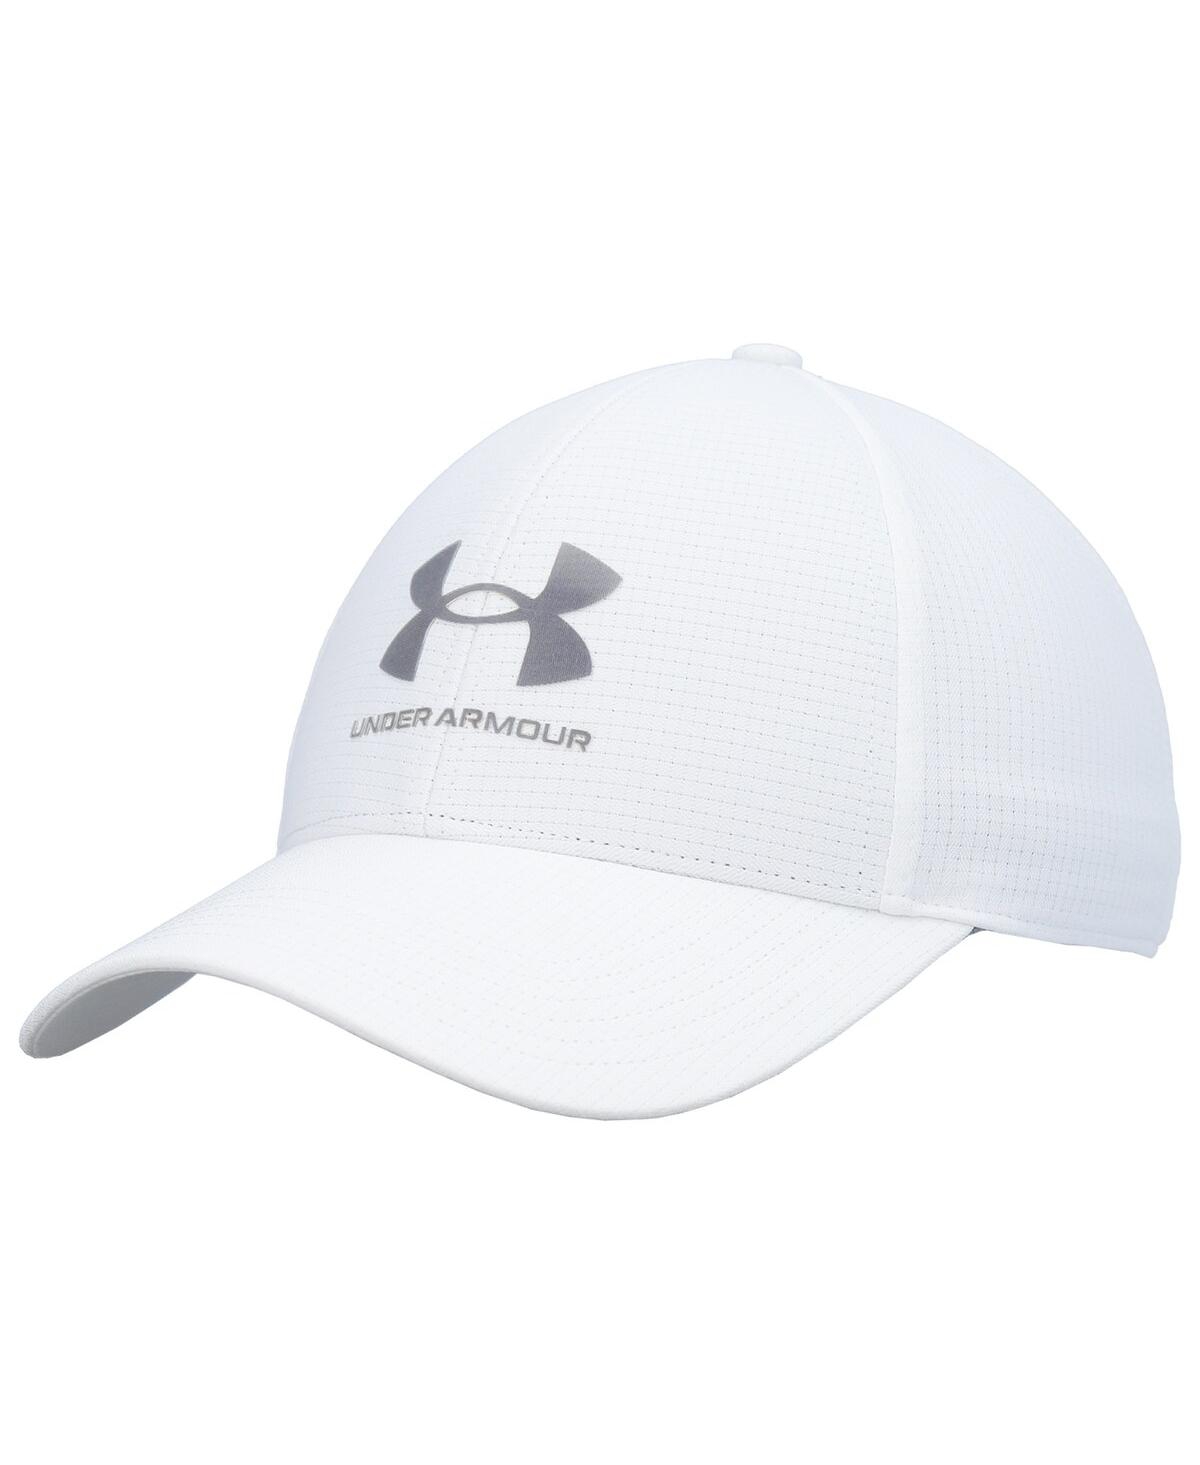 Under Armour Men's  White Logo Performance Flex Hat